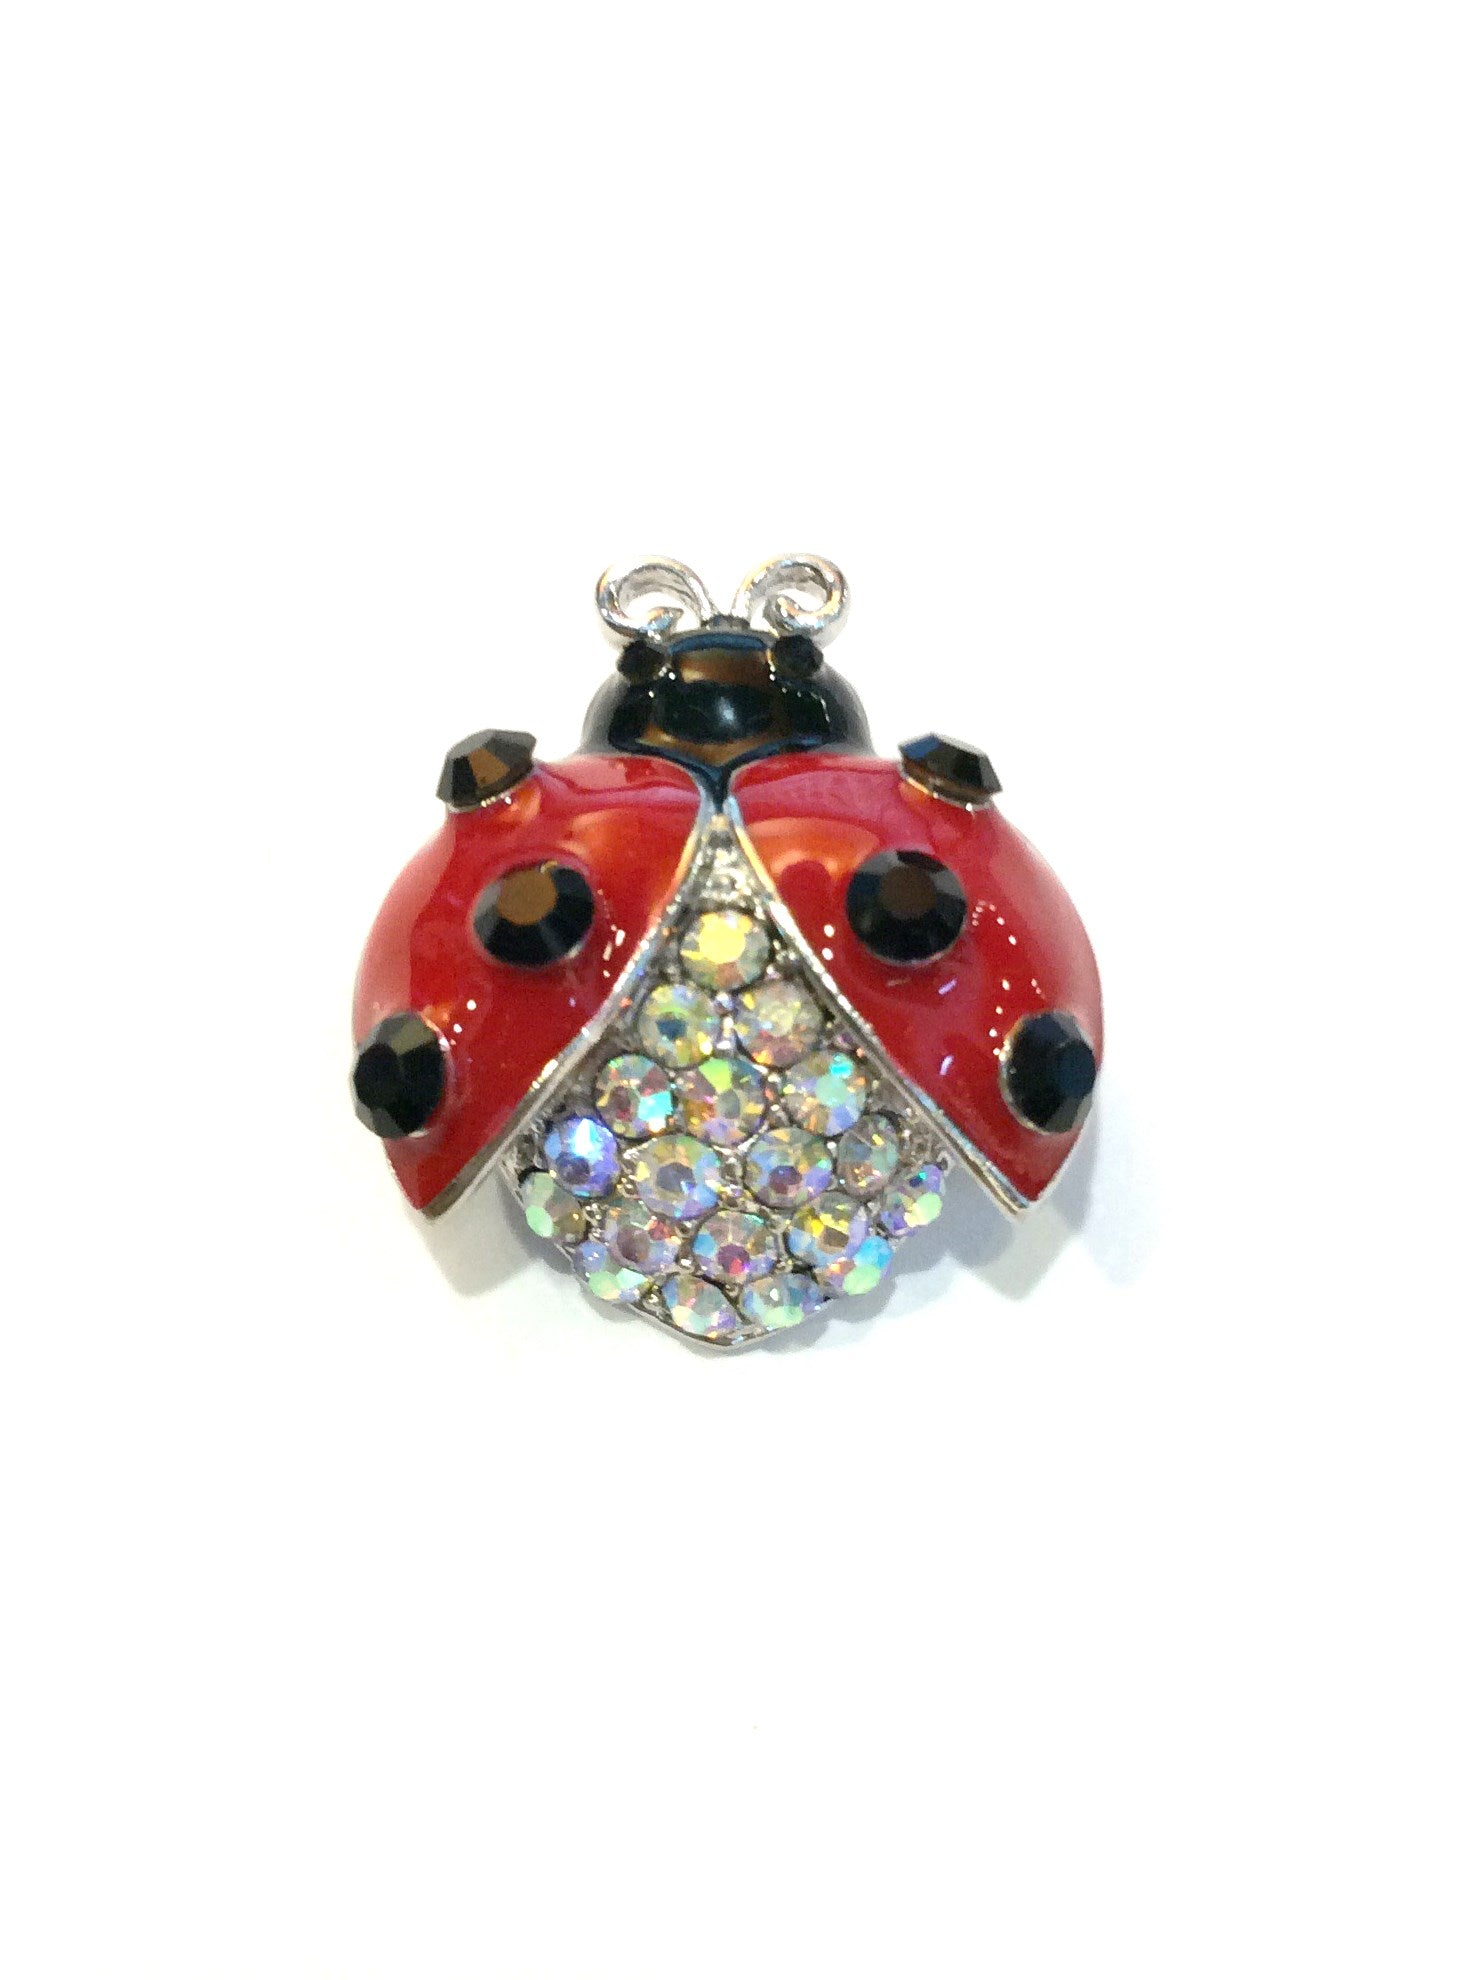 Ladybug Pin #28-11081S